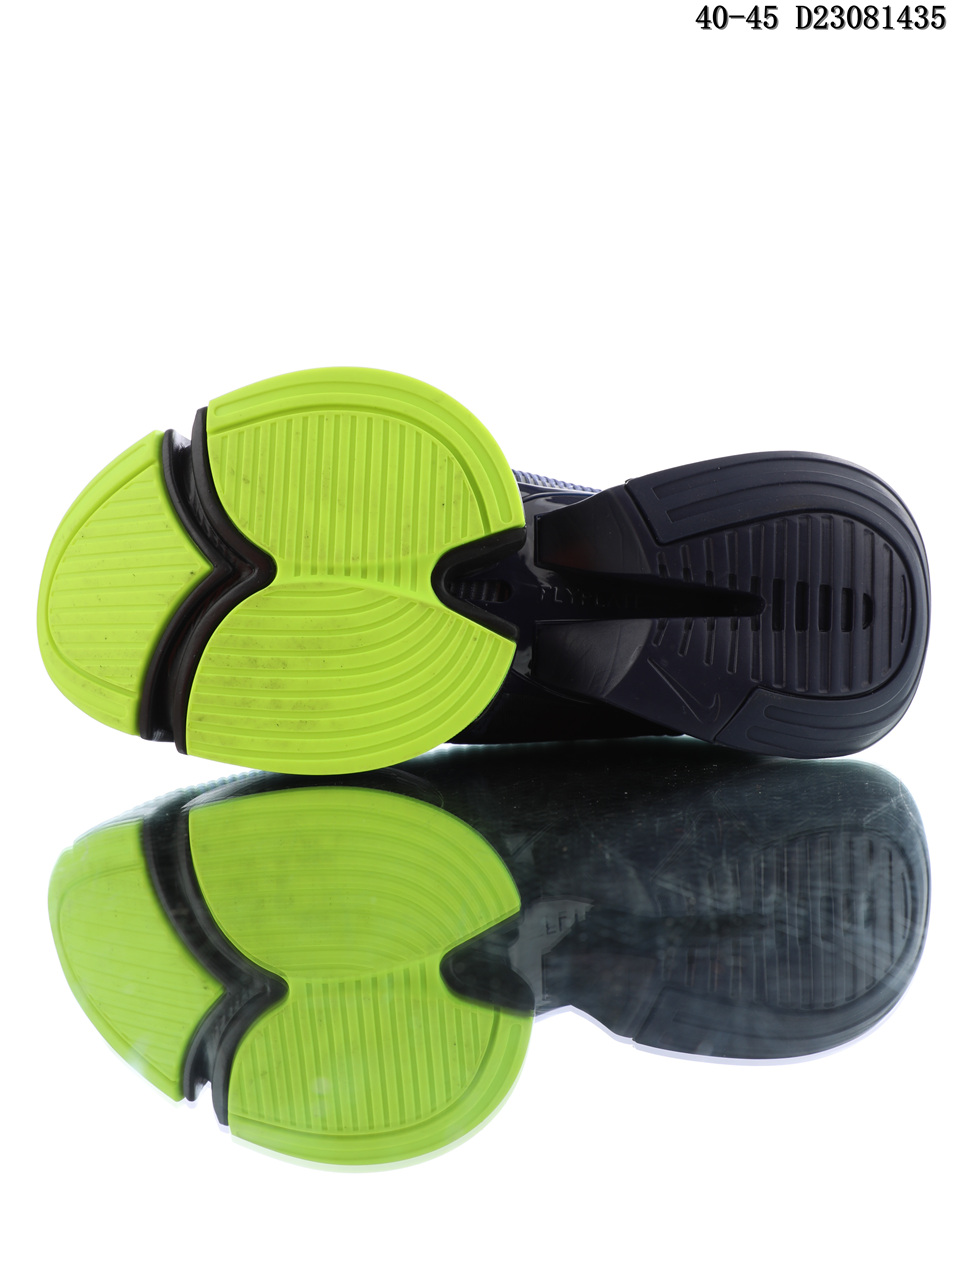 Nike Air Zoom Superrep black green jogging shoes Sole